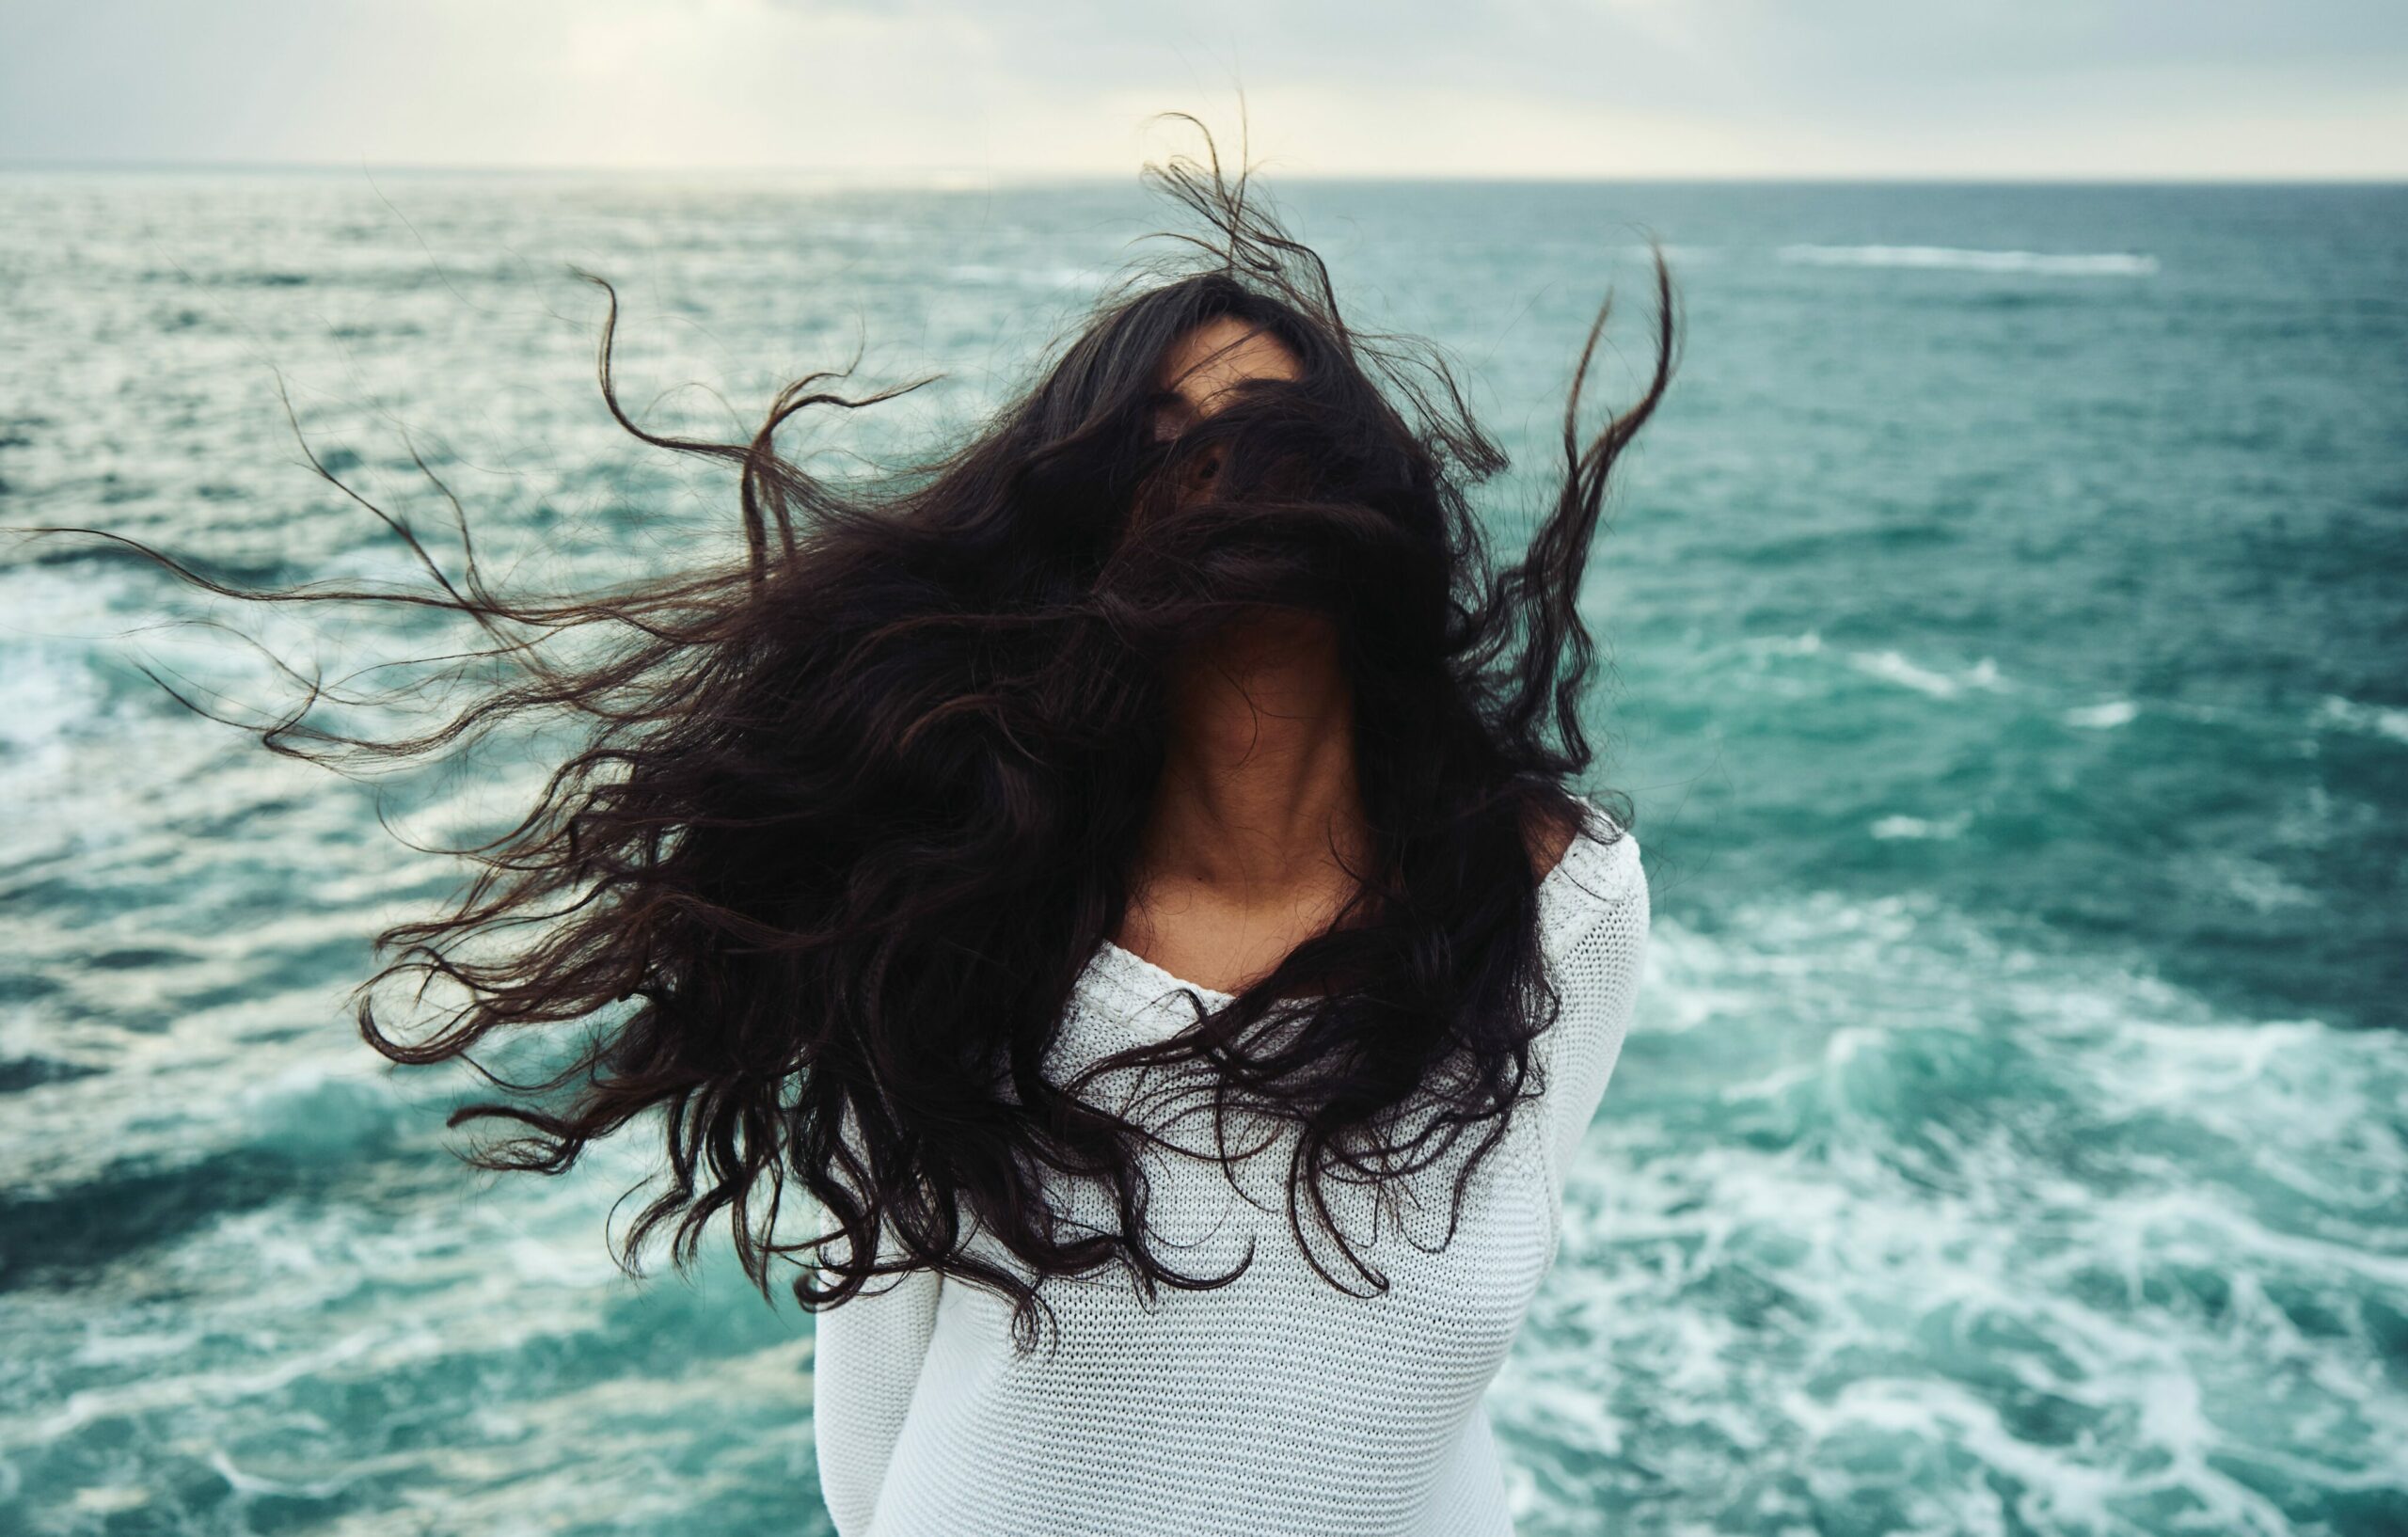 Gesichtspflege_Frau mit langen Haaren am Meer